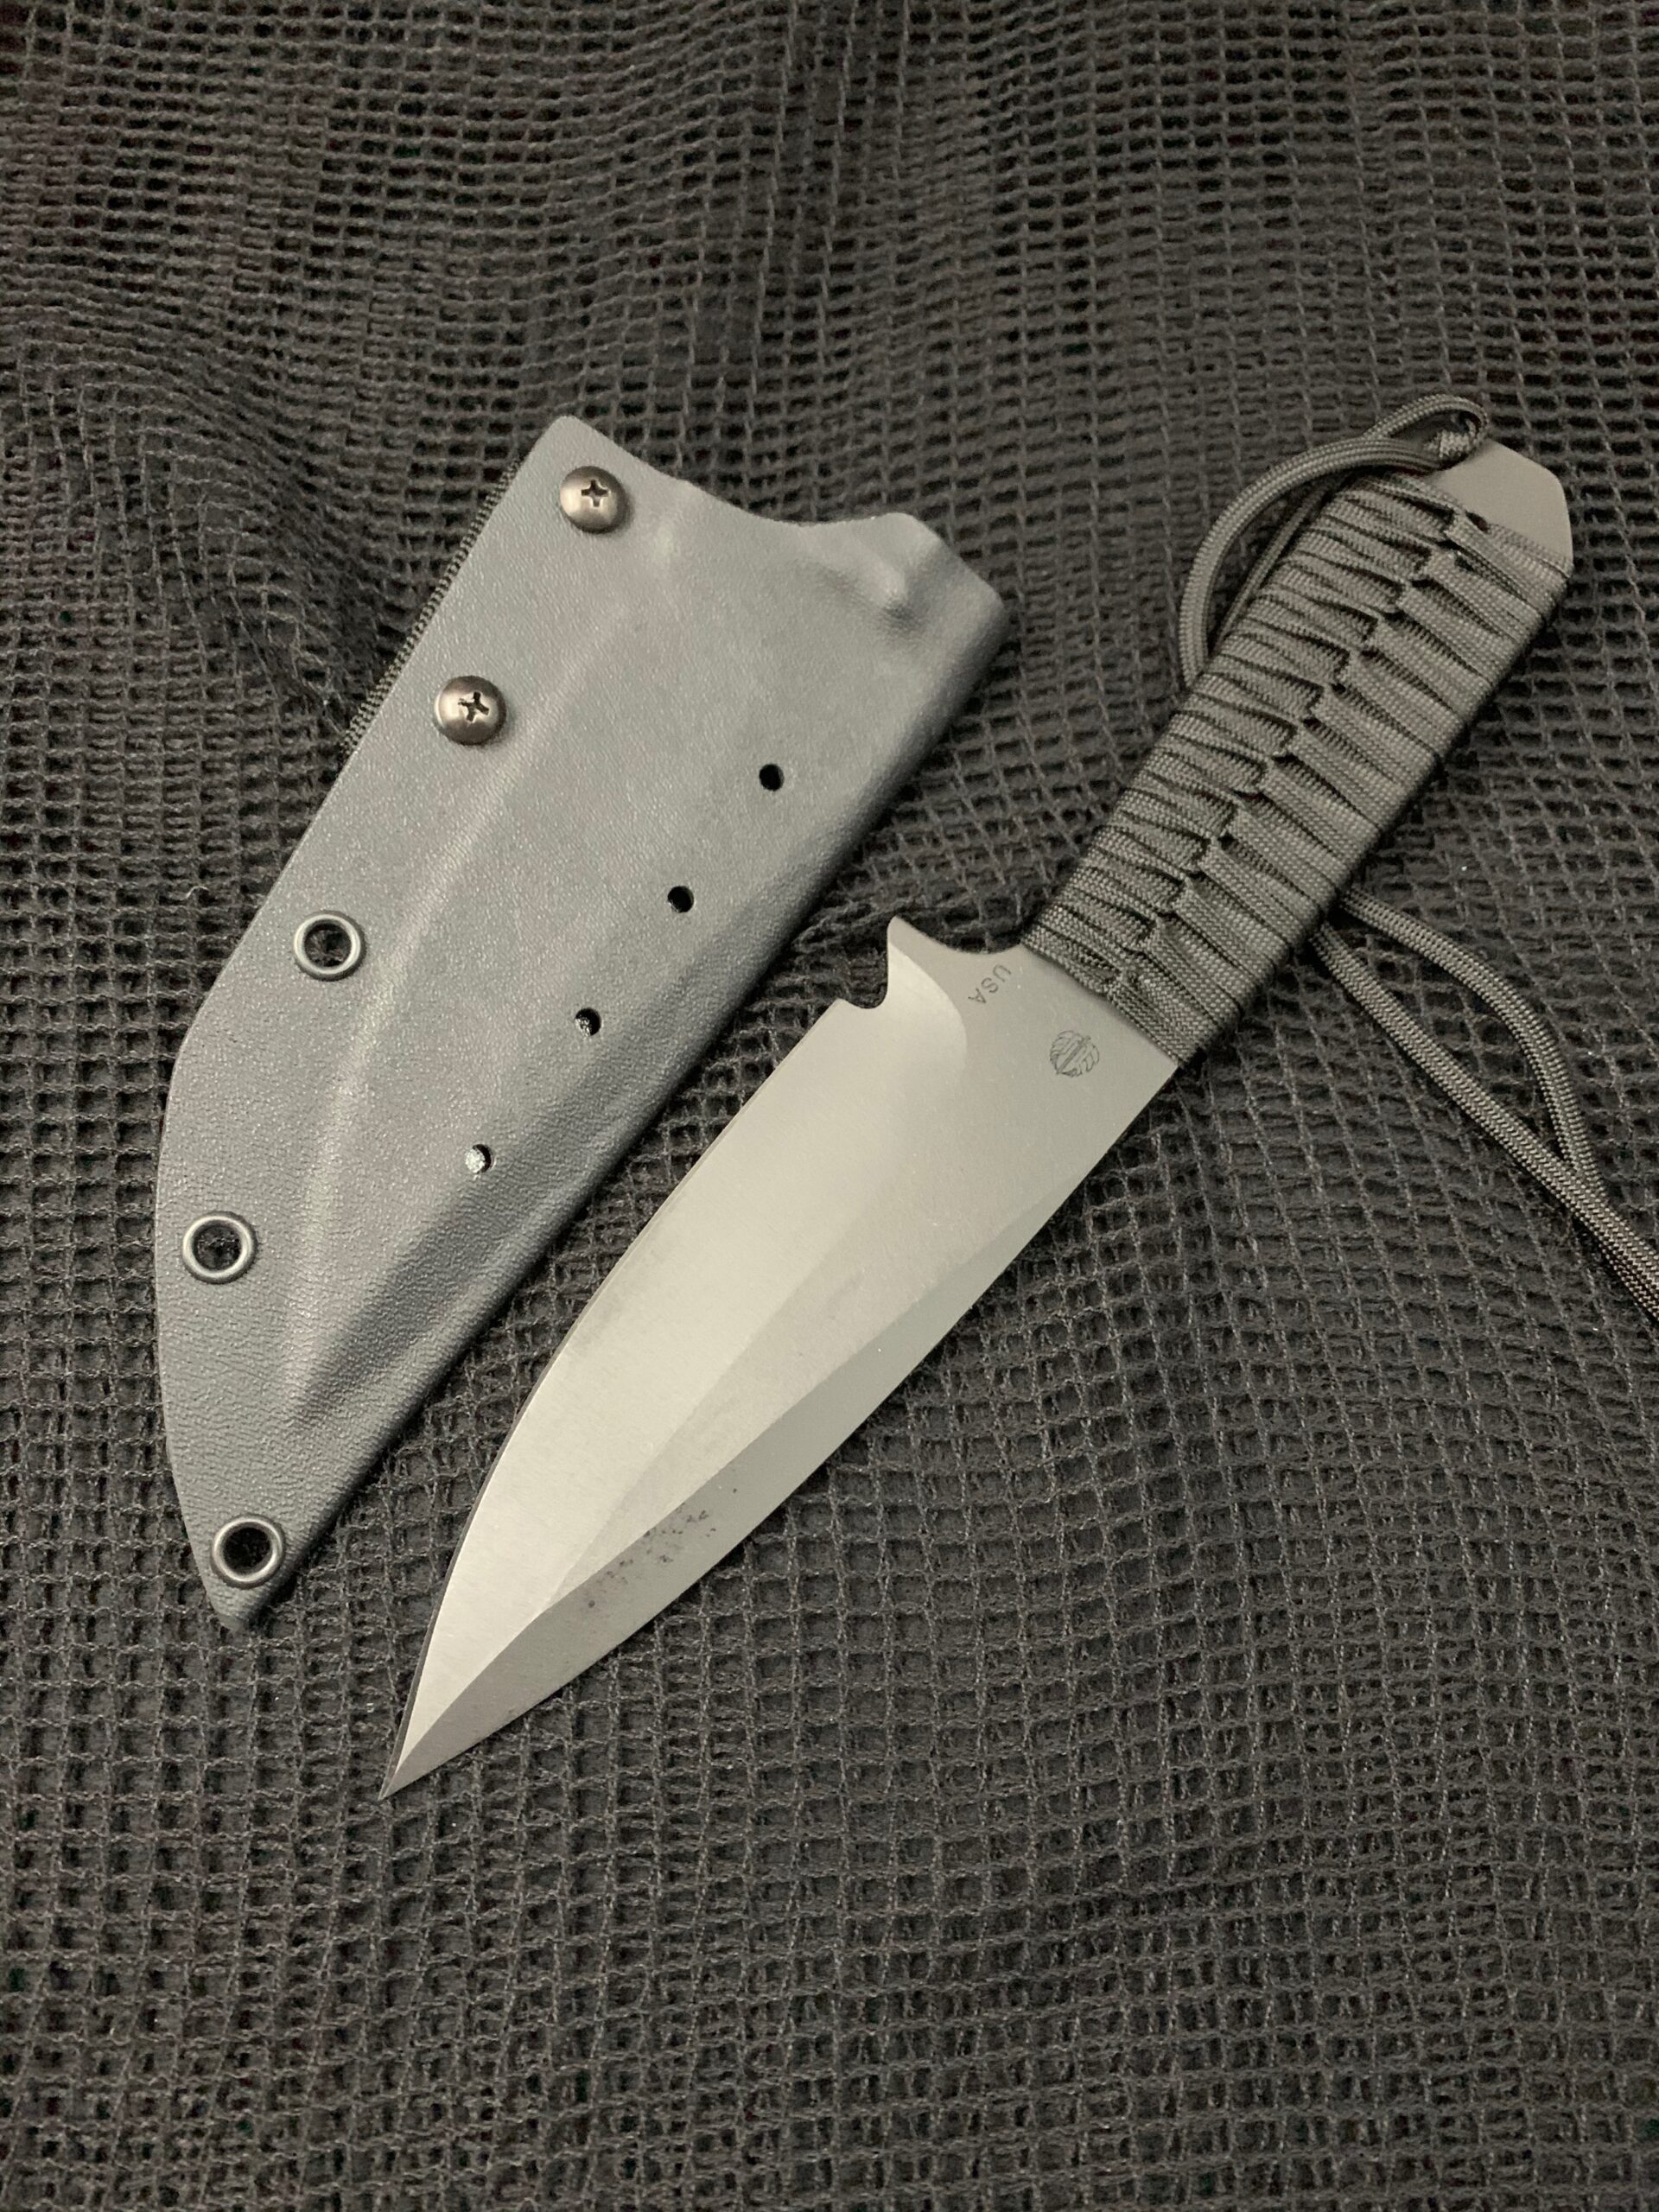 strider knives reviews